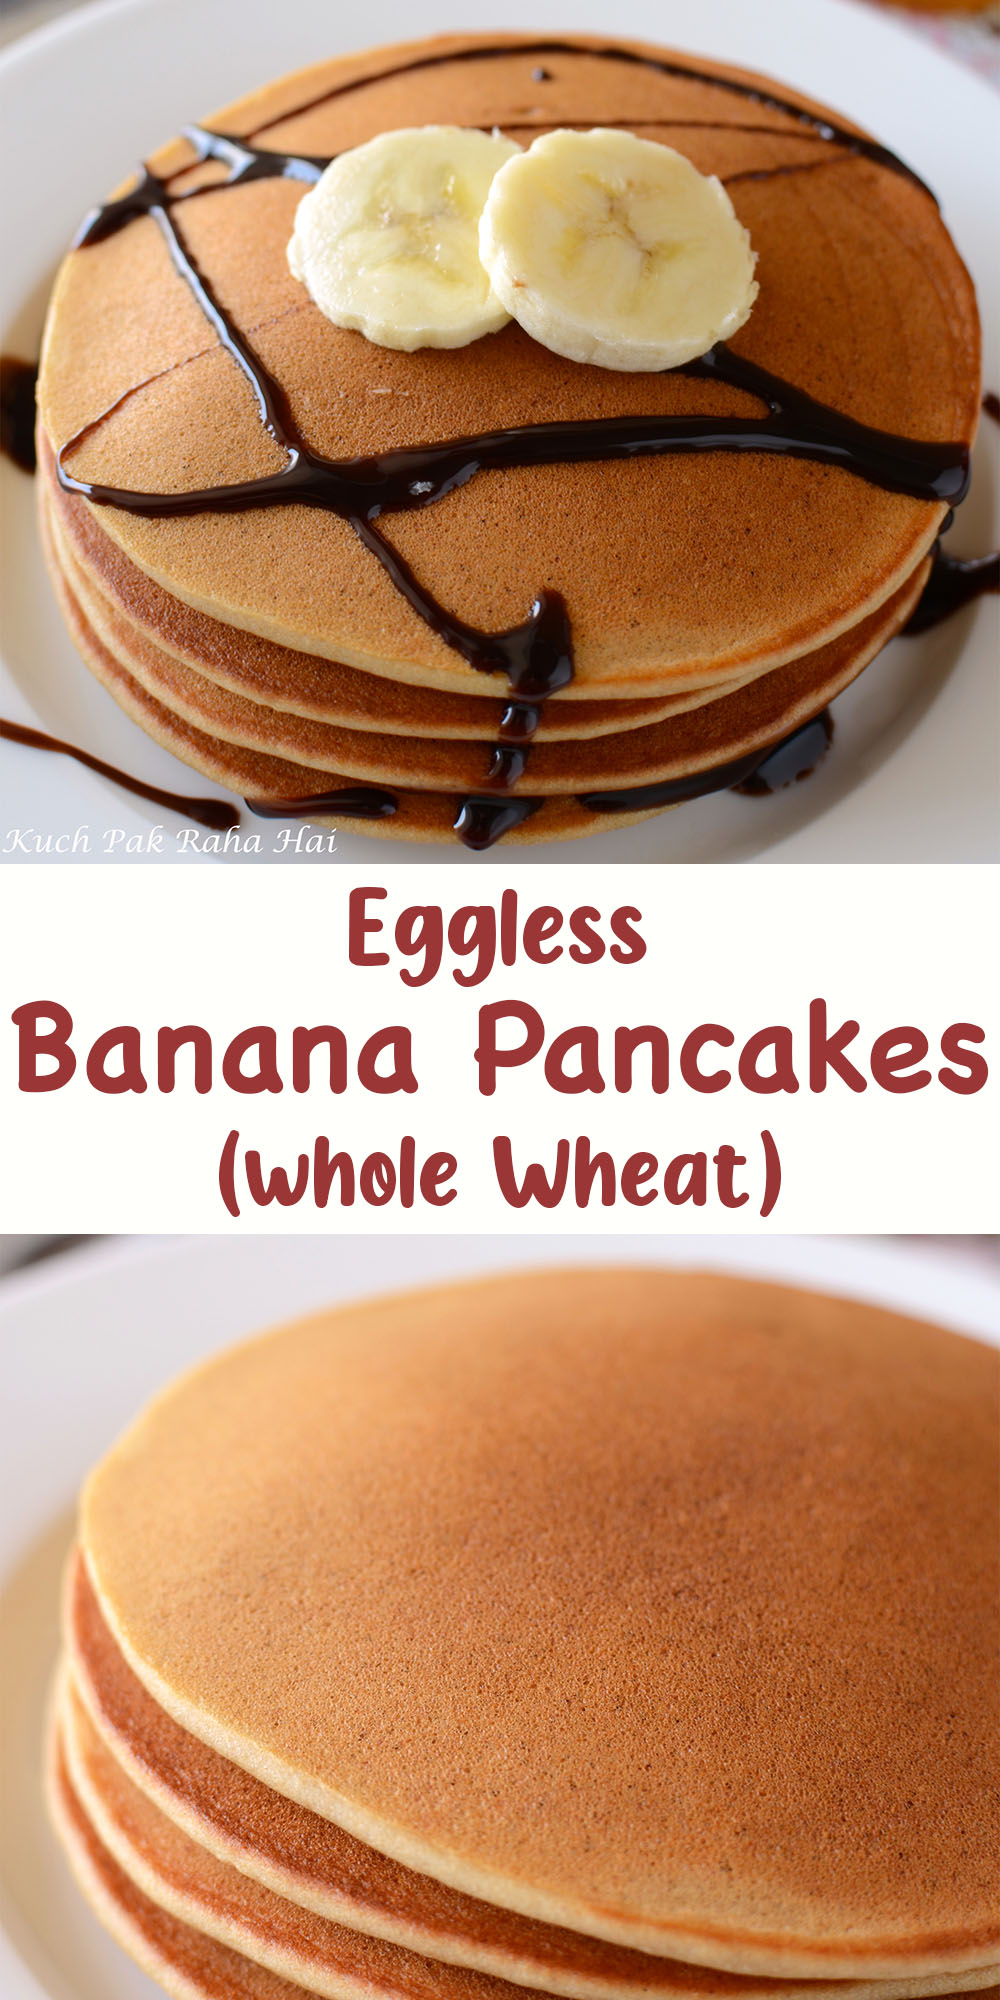 Eggless Banana Pancakes with Whole Wheat